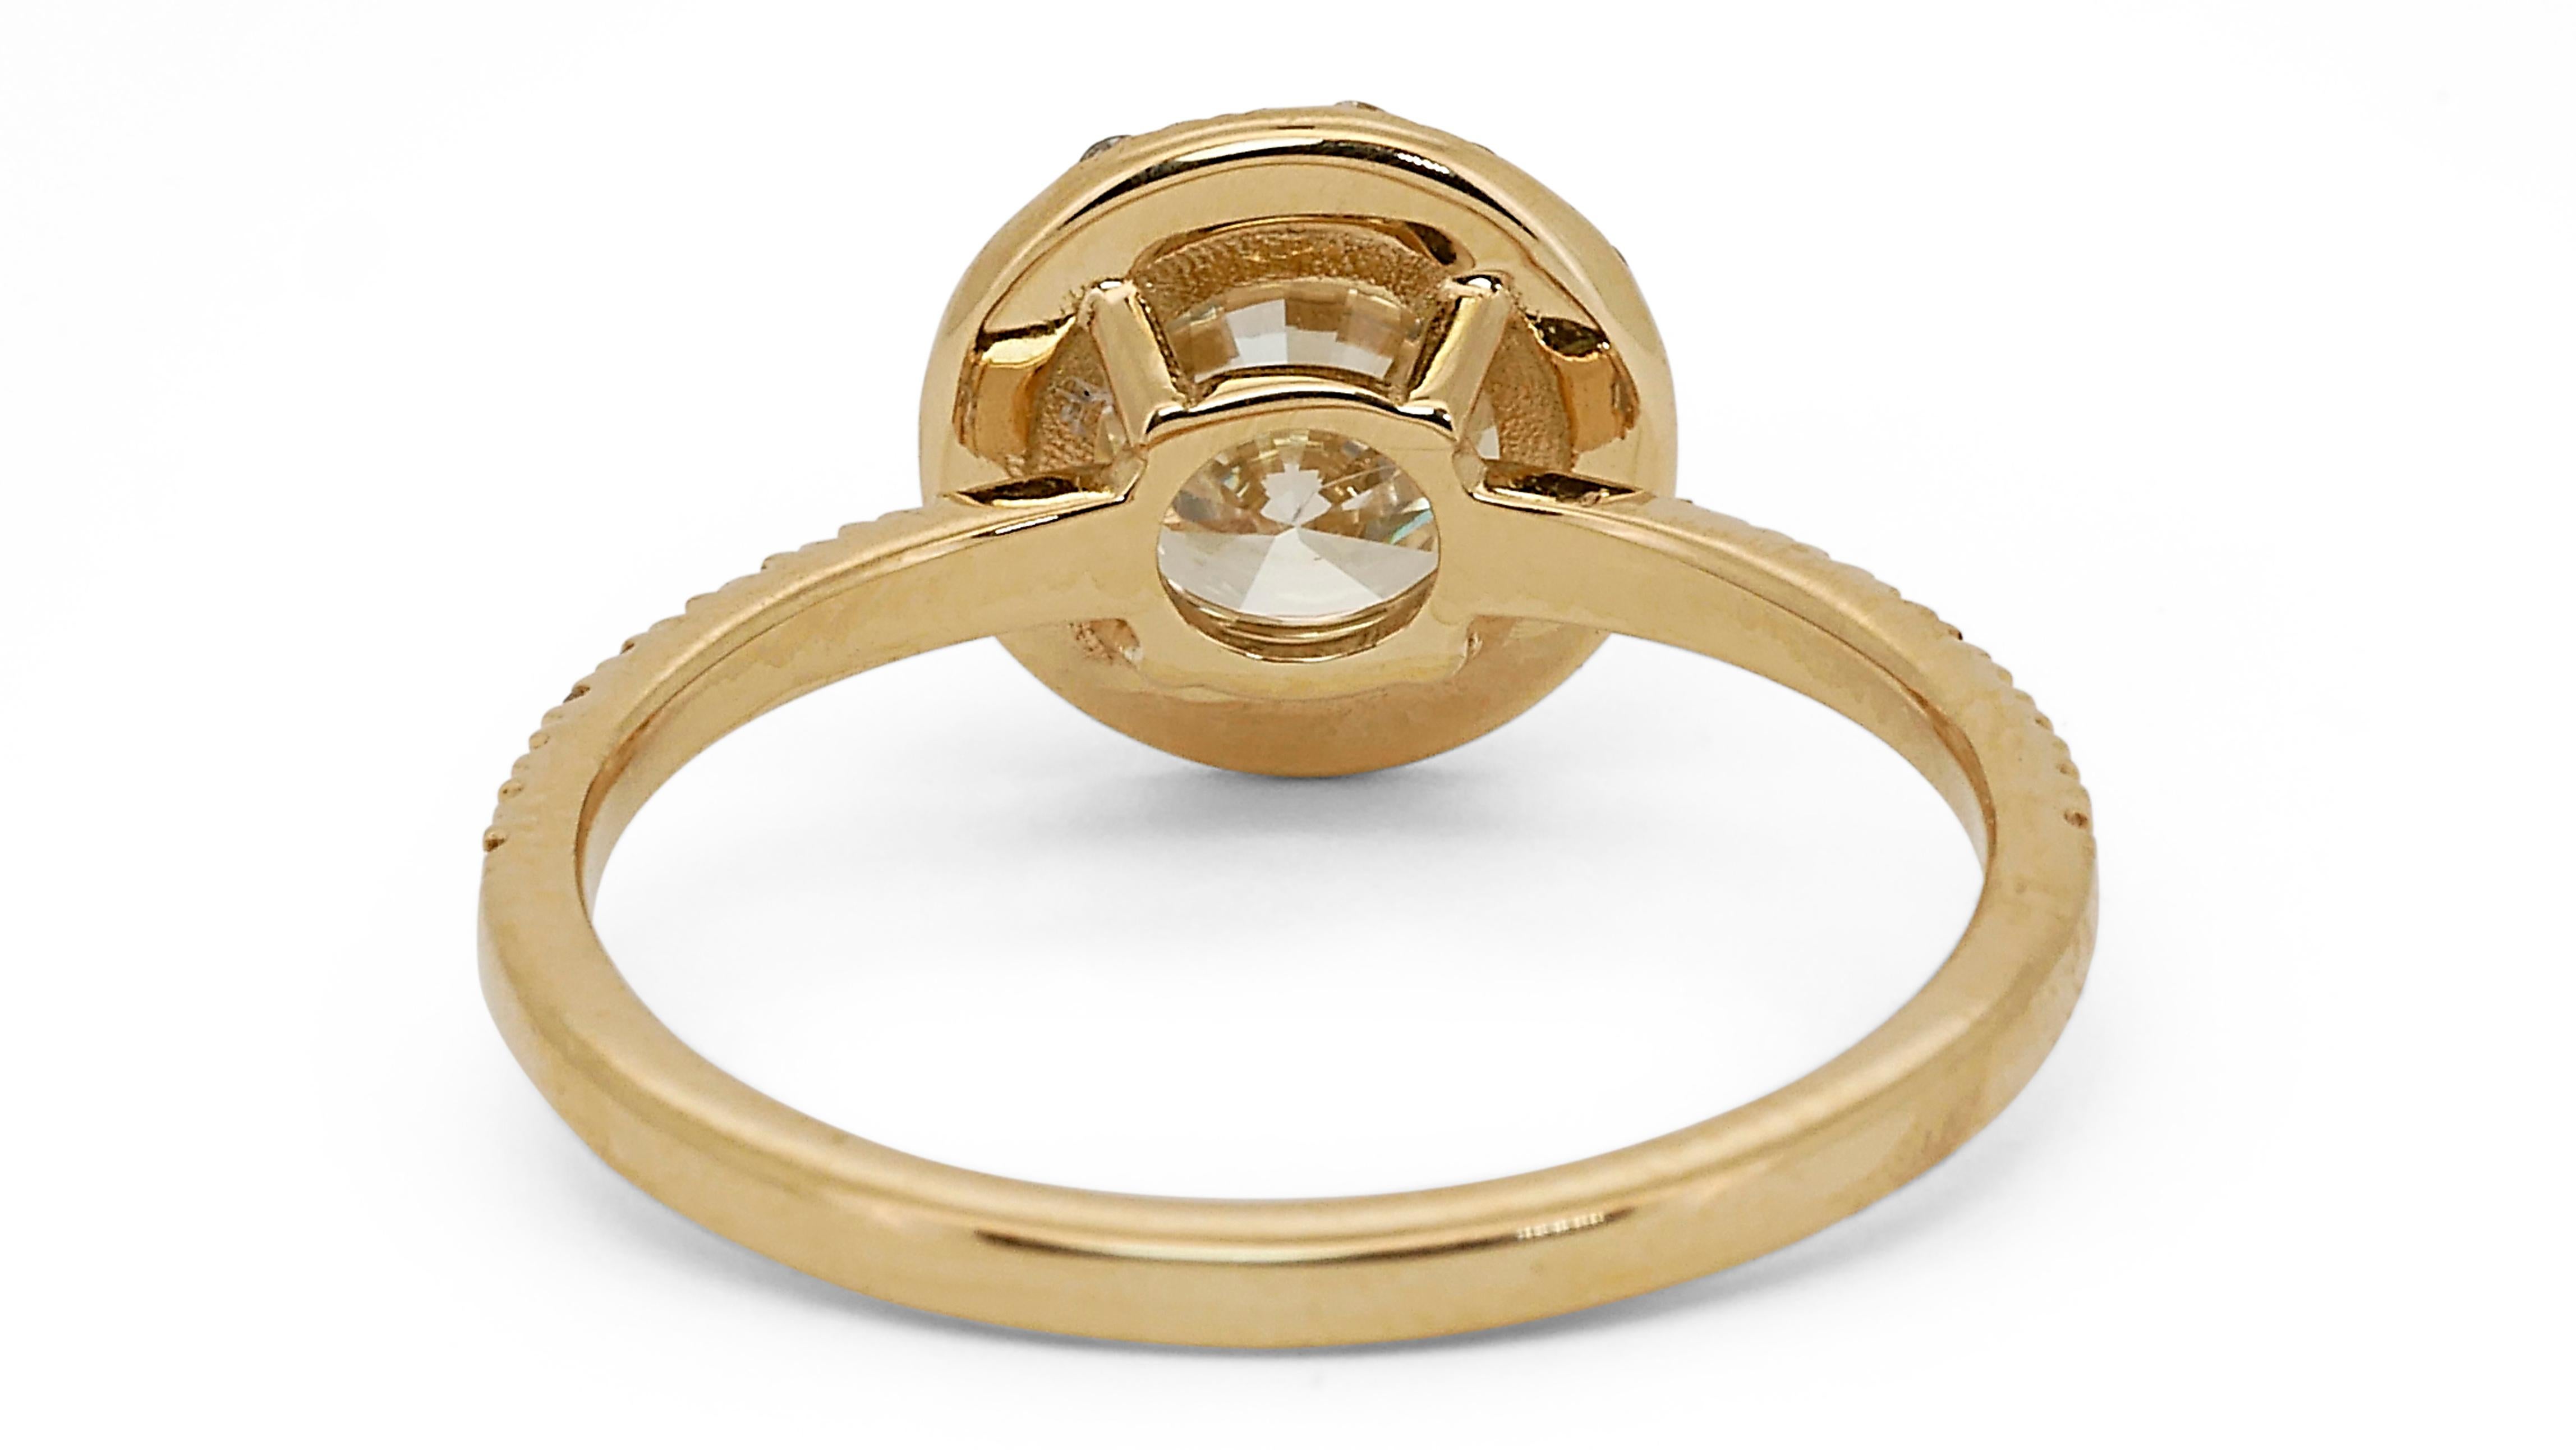 Stunning 18k Yellow Gold Halo Ring with 1.35 Natural Diamonds IGI Certificate 3